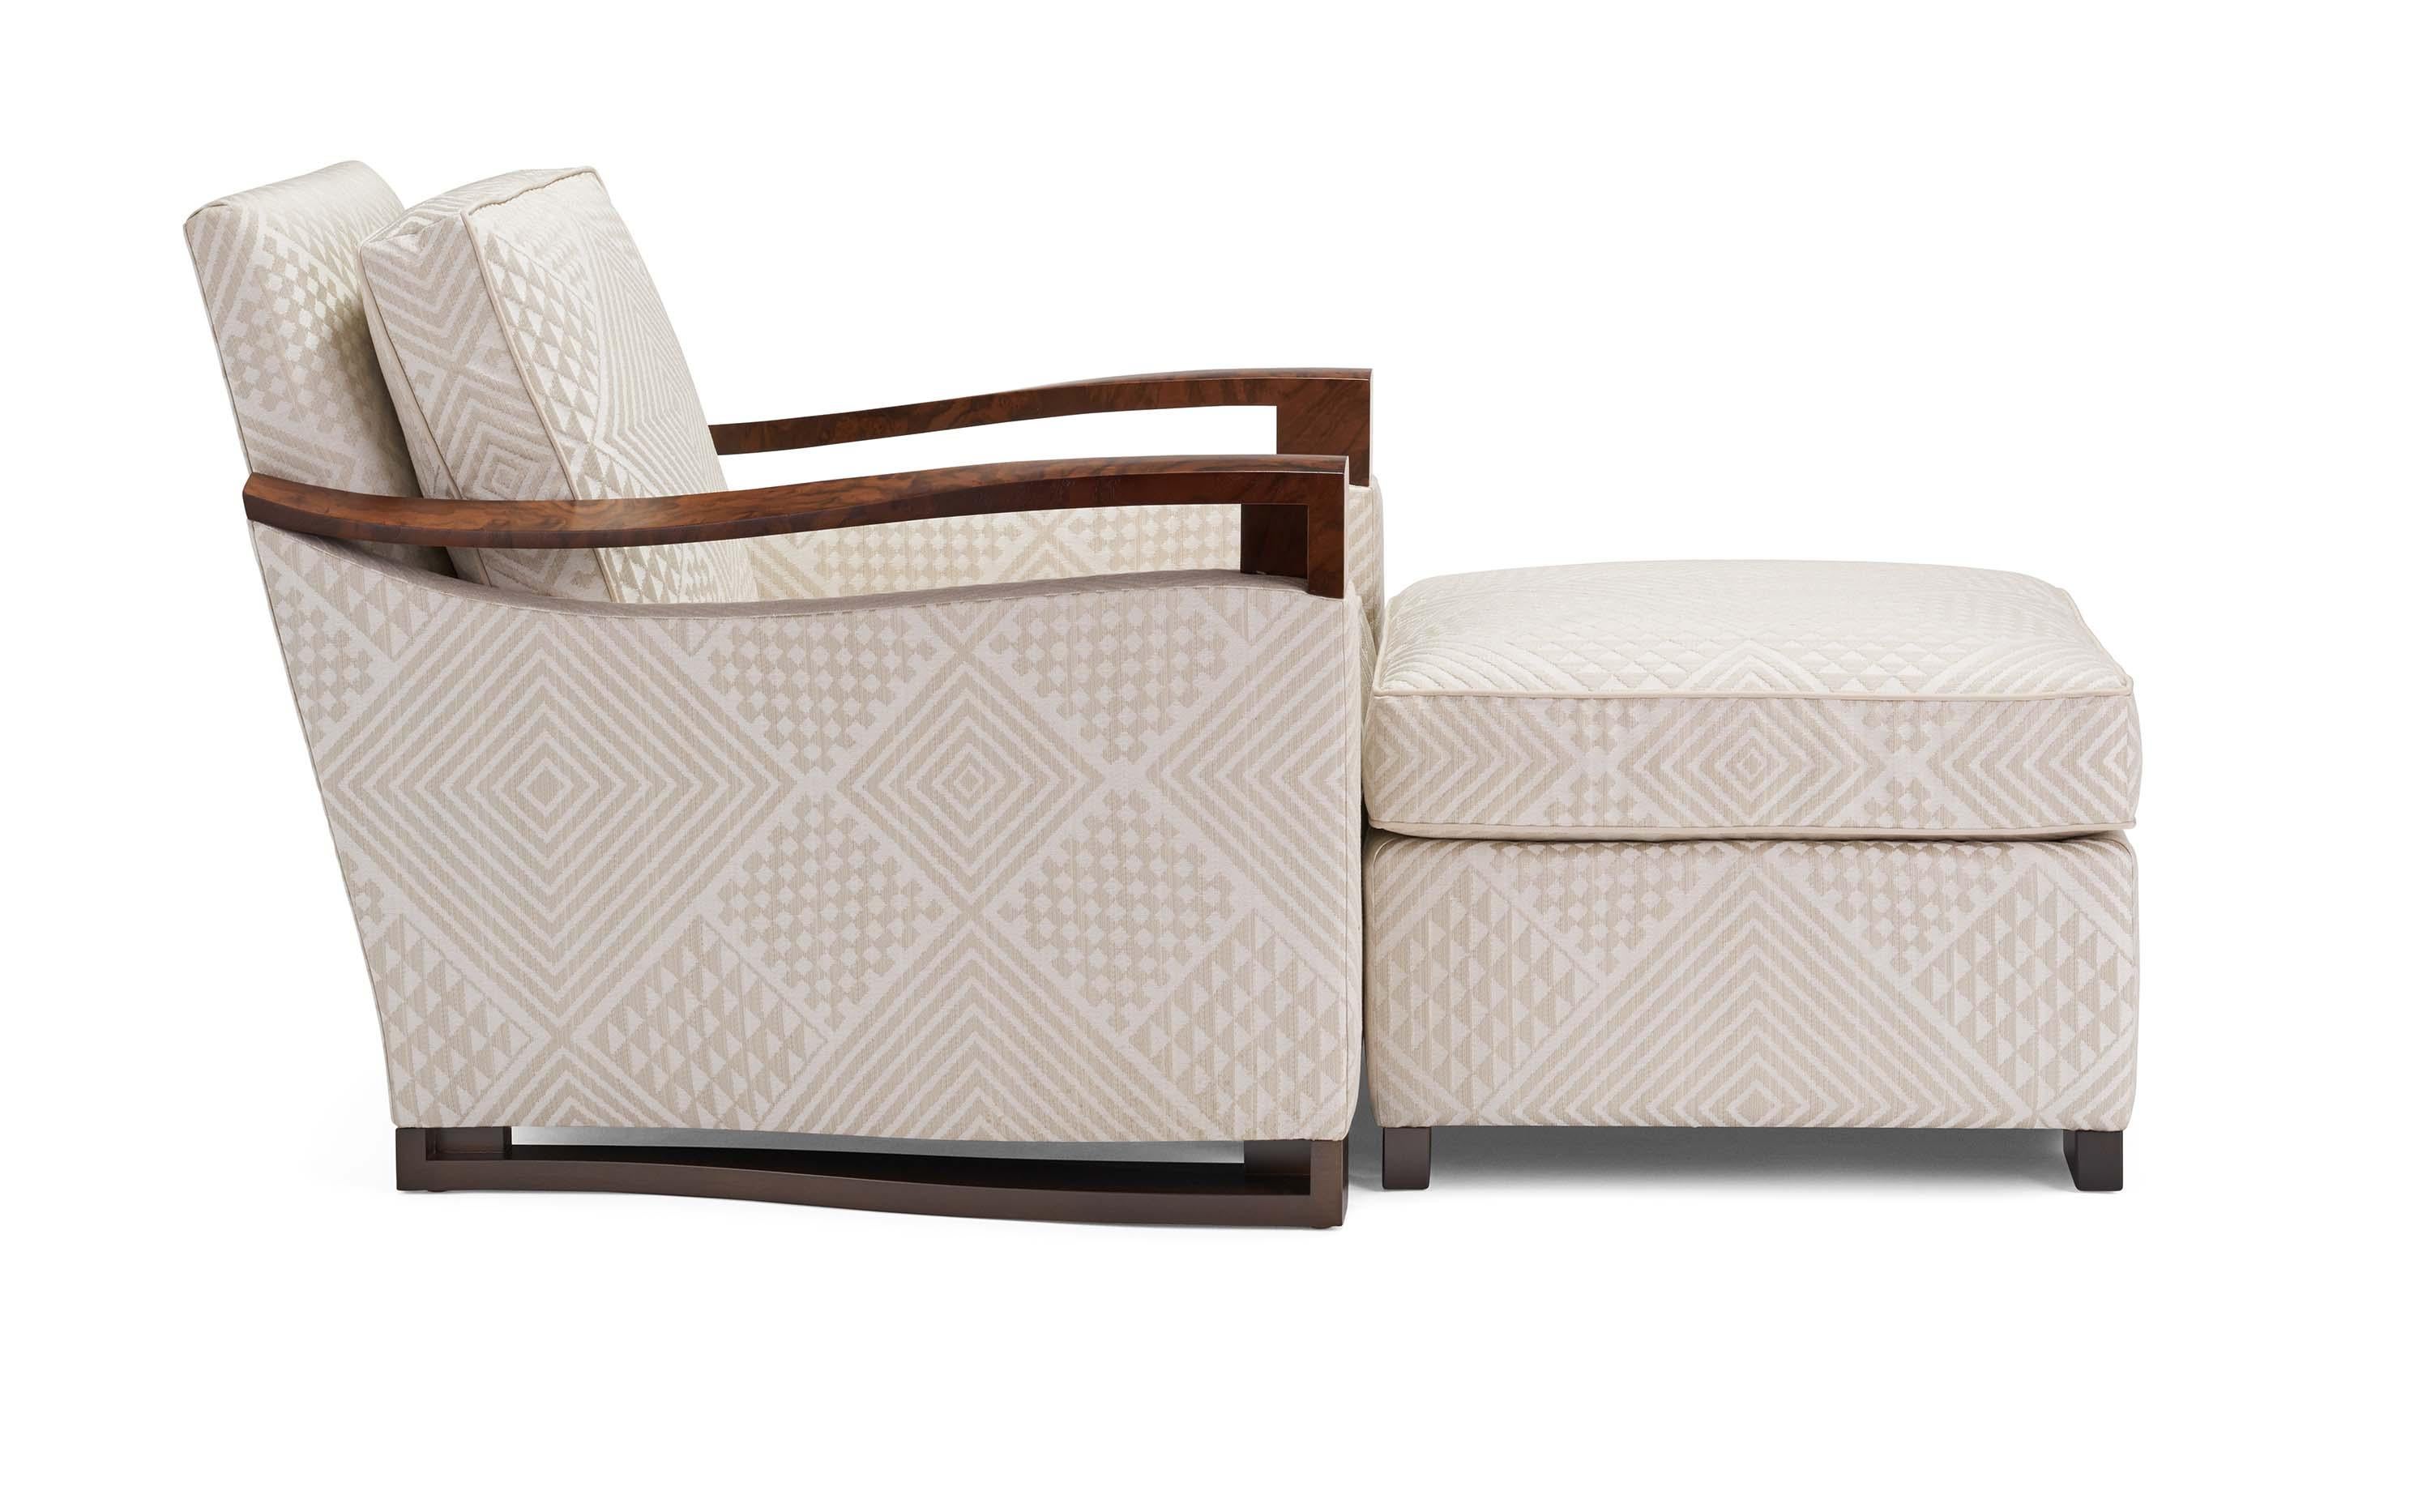 Donghia Woodbridge Club Chair and Ottoman in Cream Upholstery, Geometric Pattern (amerikanisch) im Angebot